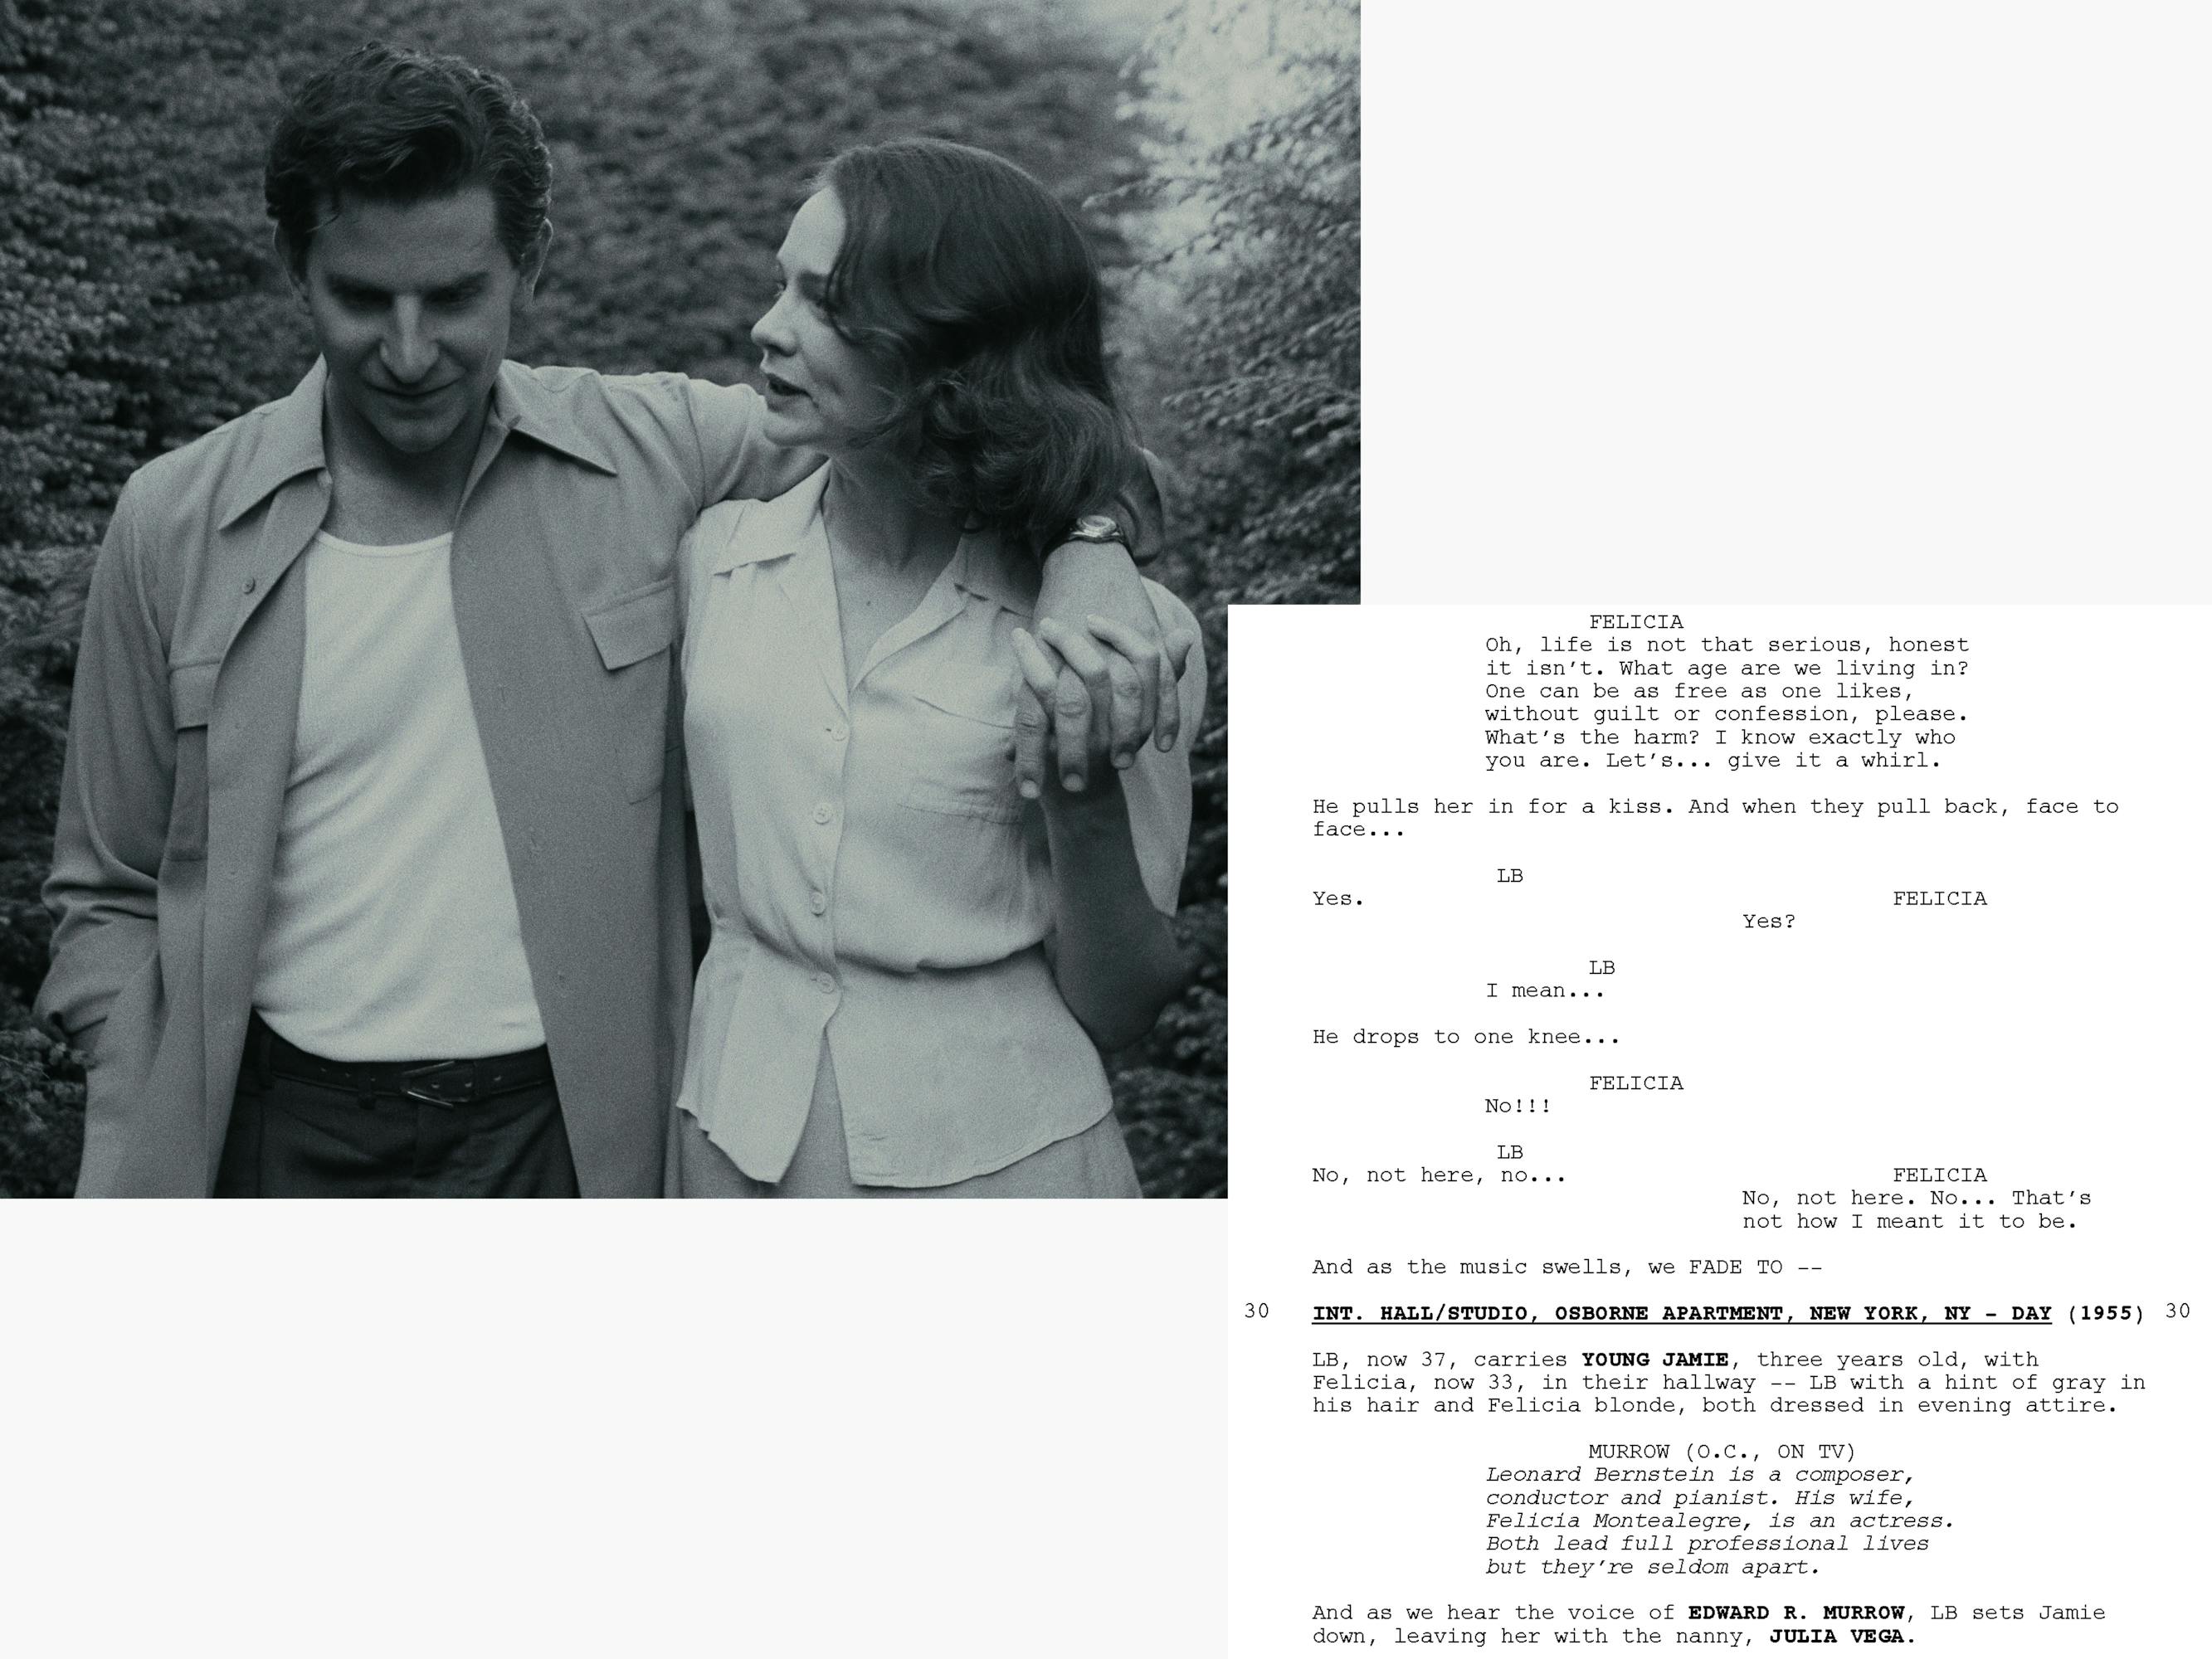 Leonard Bernstein (Bradley Cooper) and Felicia Montealegre Cohn Bernstein (Carey Mulligan) and a page from the script.